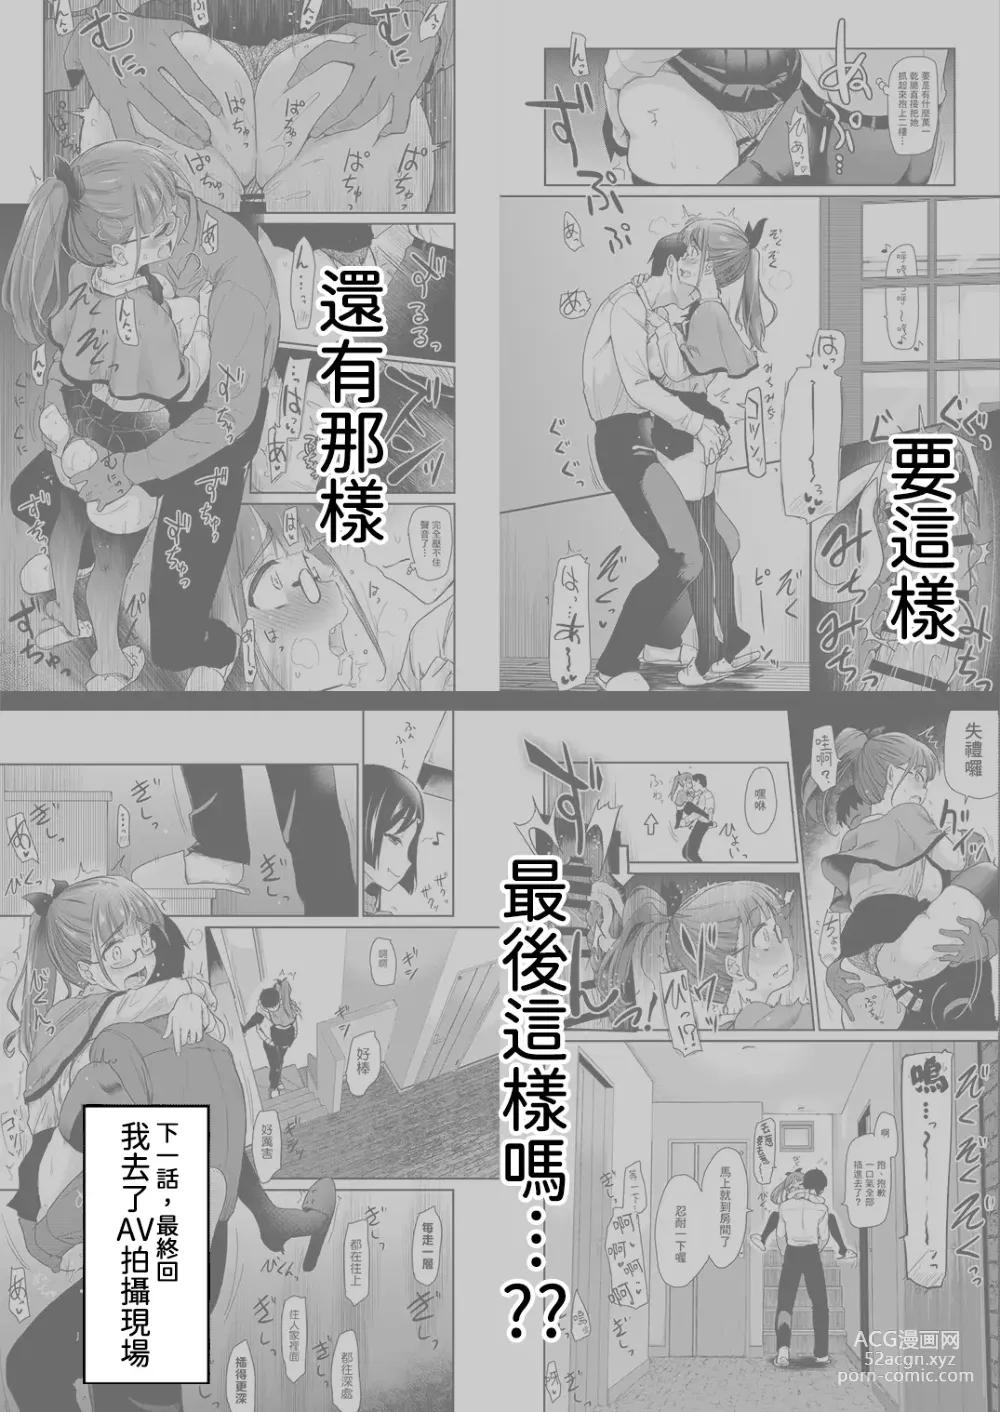 Page 22 of doujinshi 我畫的色情漫畫被AV真人化了!? 因為機會難得所以去拍攝現場觀摩之後的心得感想